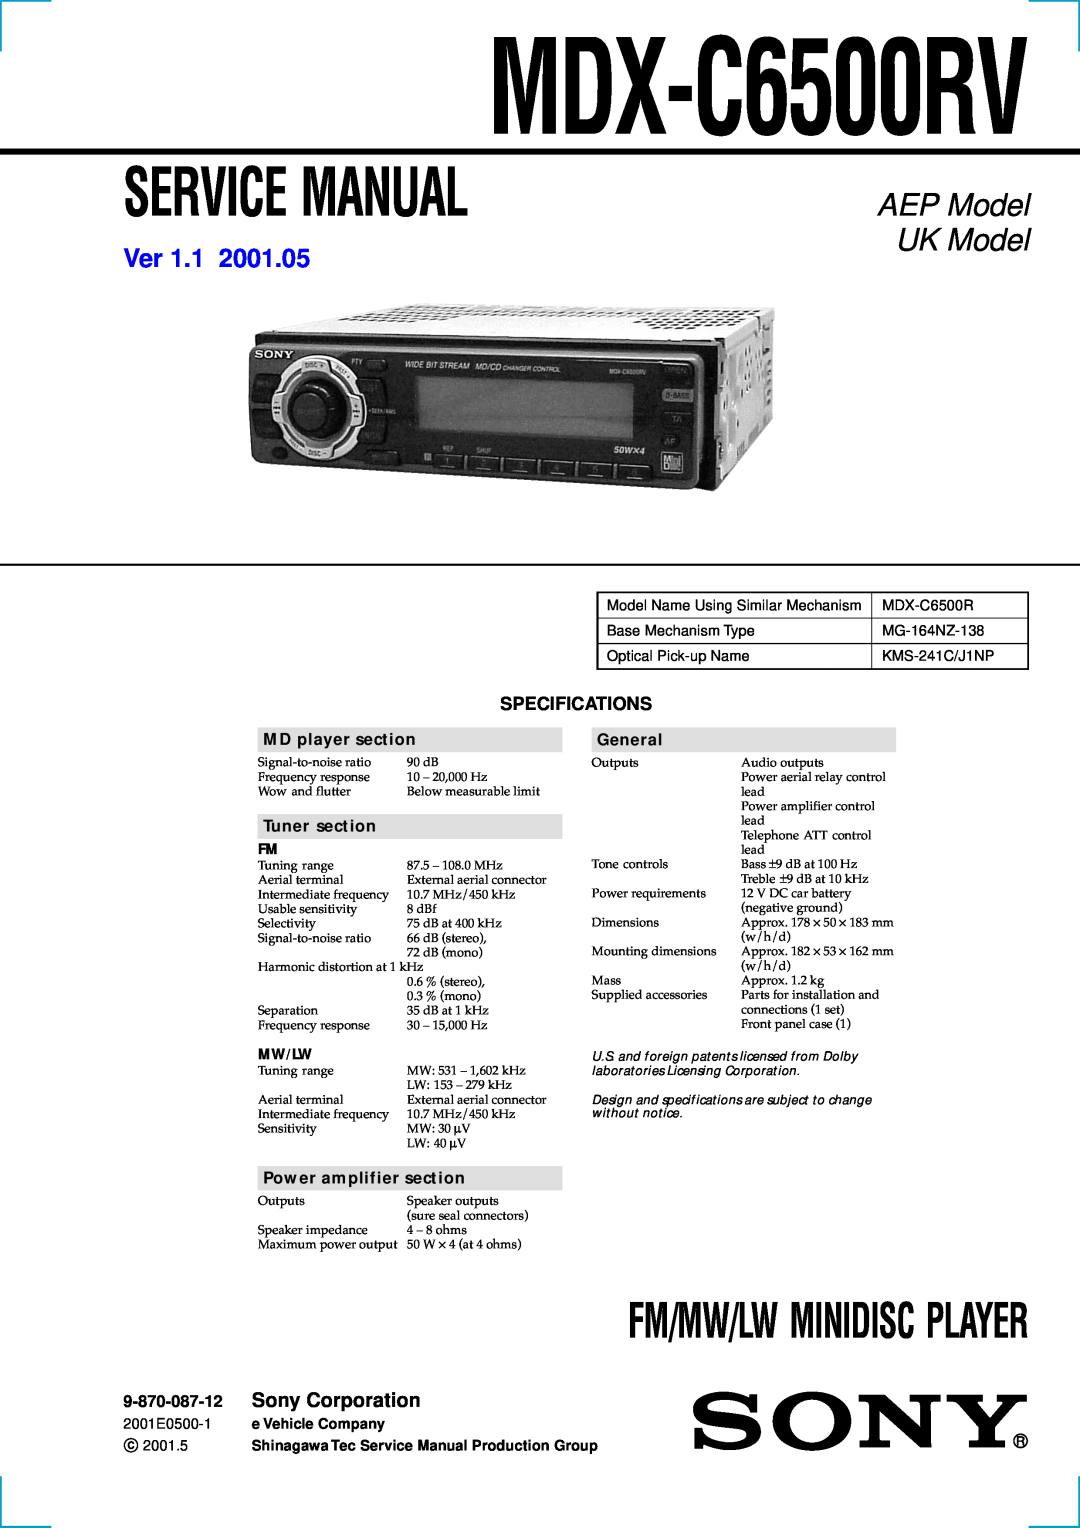 Sony MDX-C6500RV service manual Specifications, 9-870-087-12, Fm/Mw/Lw Minidisc Player, AEP Model, UK Model, Ver, General 